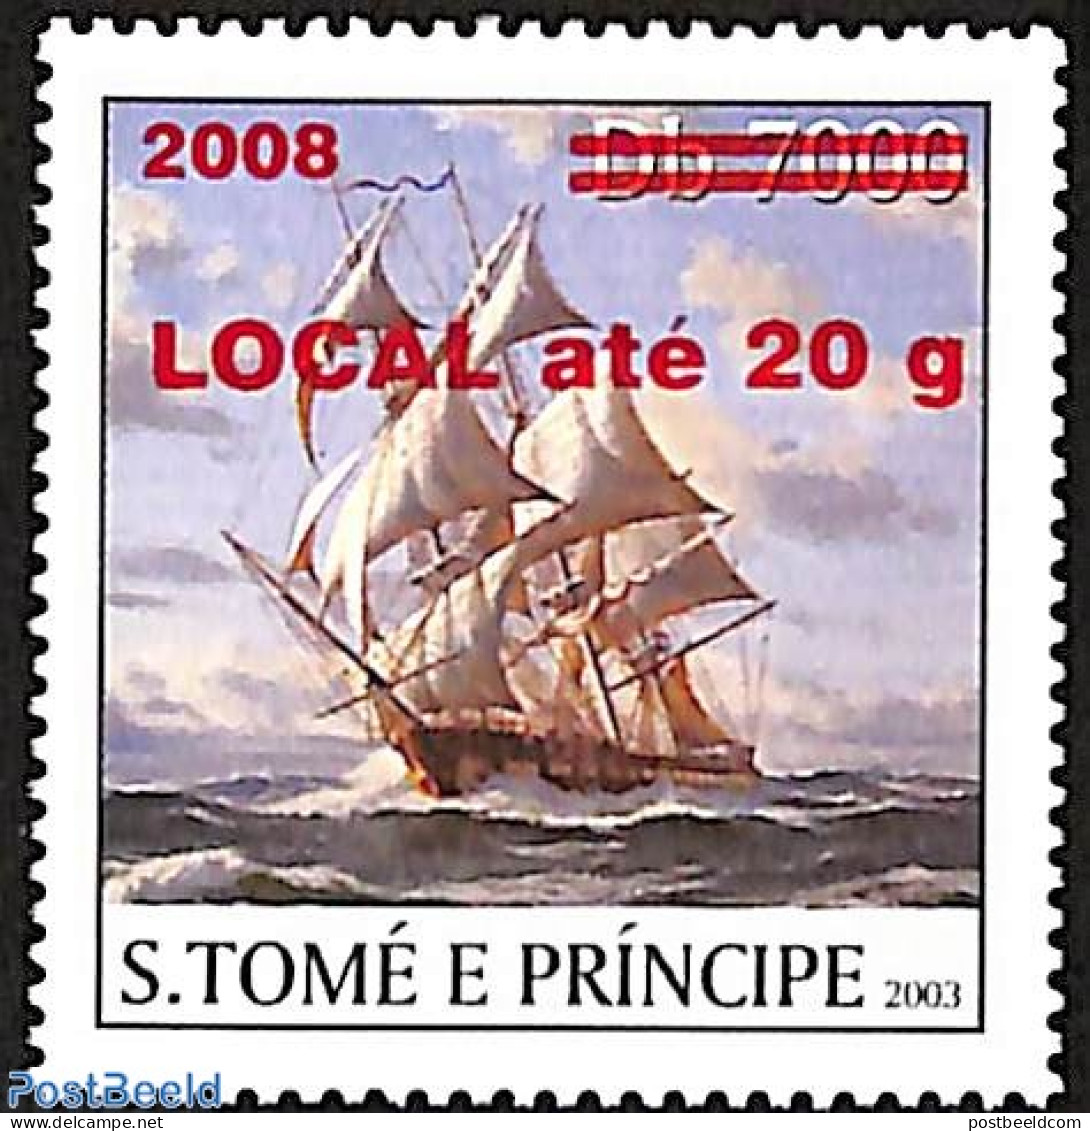 Sao Tome/Principe 2008 Ship, Overprint, Mint NH, Nature - Transport - Water, Dams & Falls - Ships And Boats - Bateaux